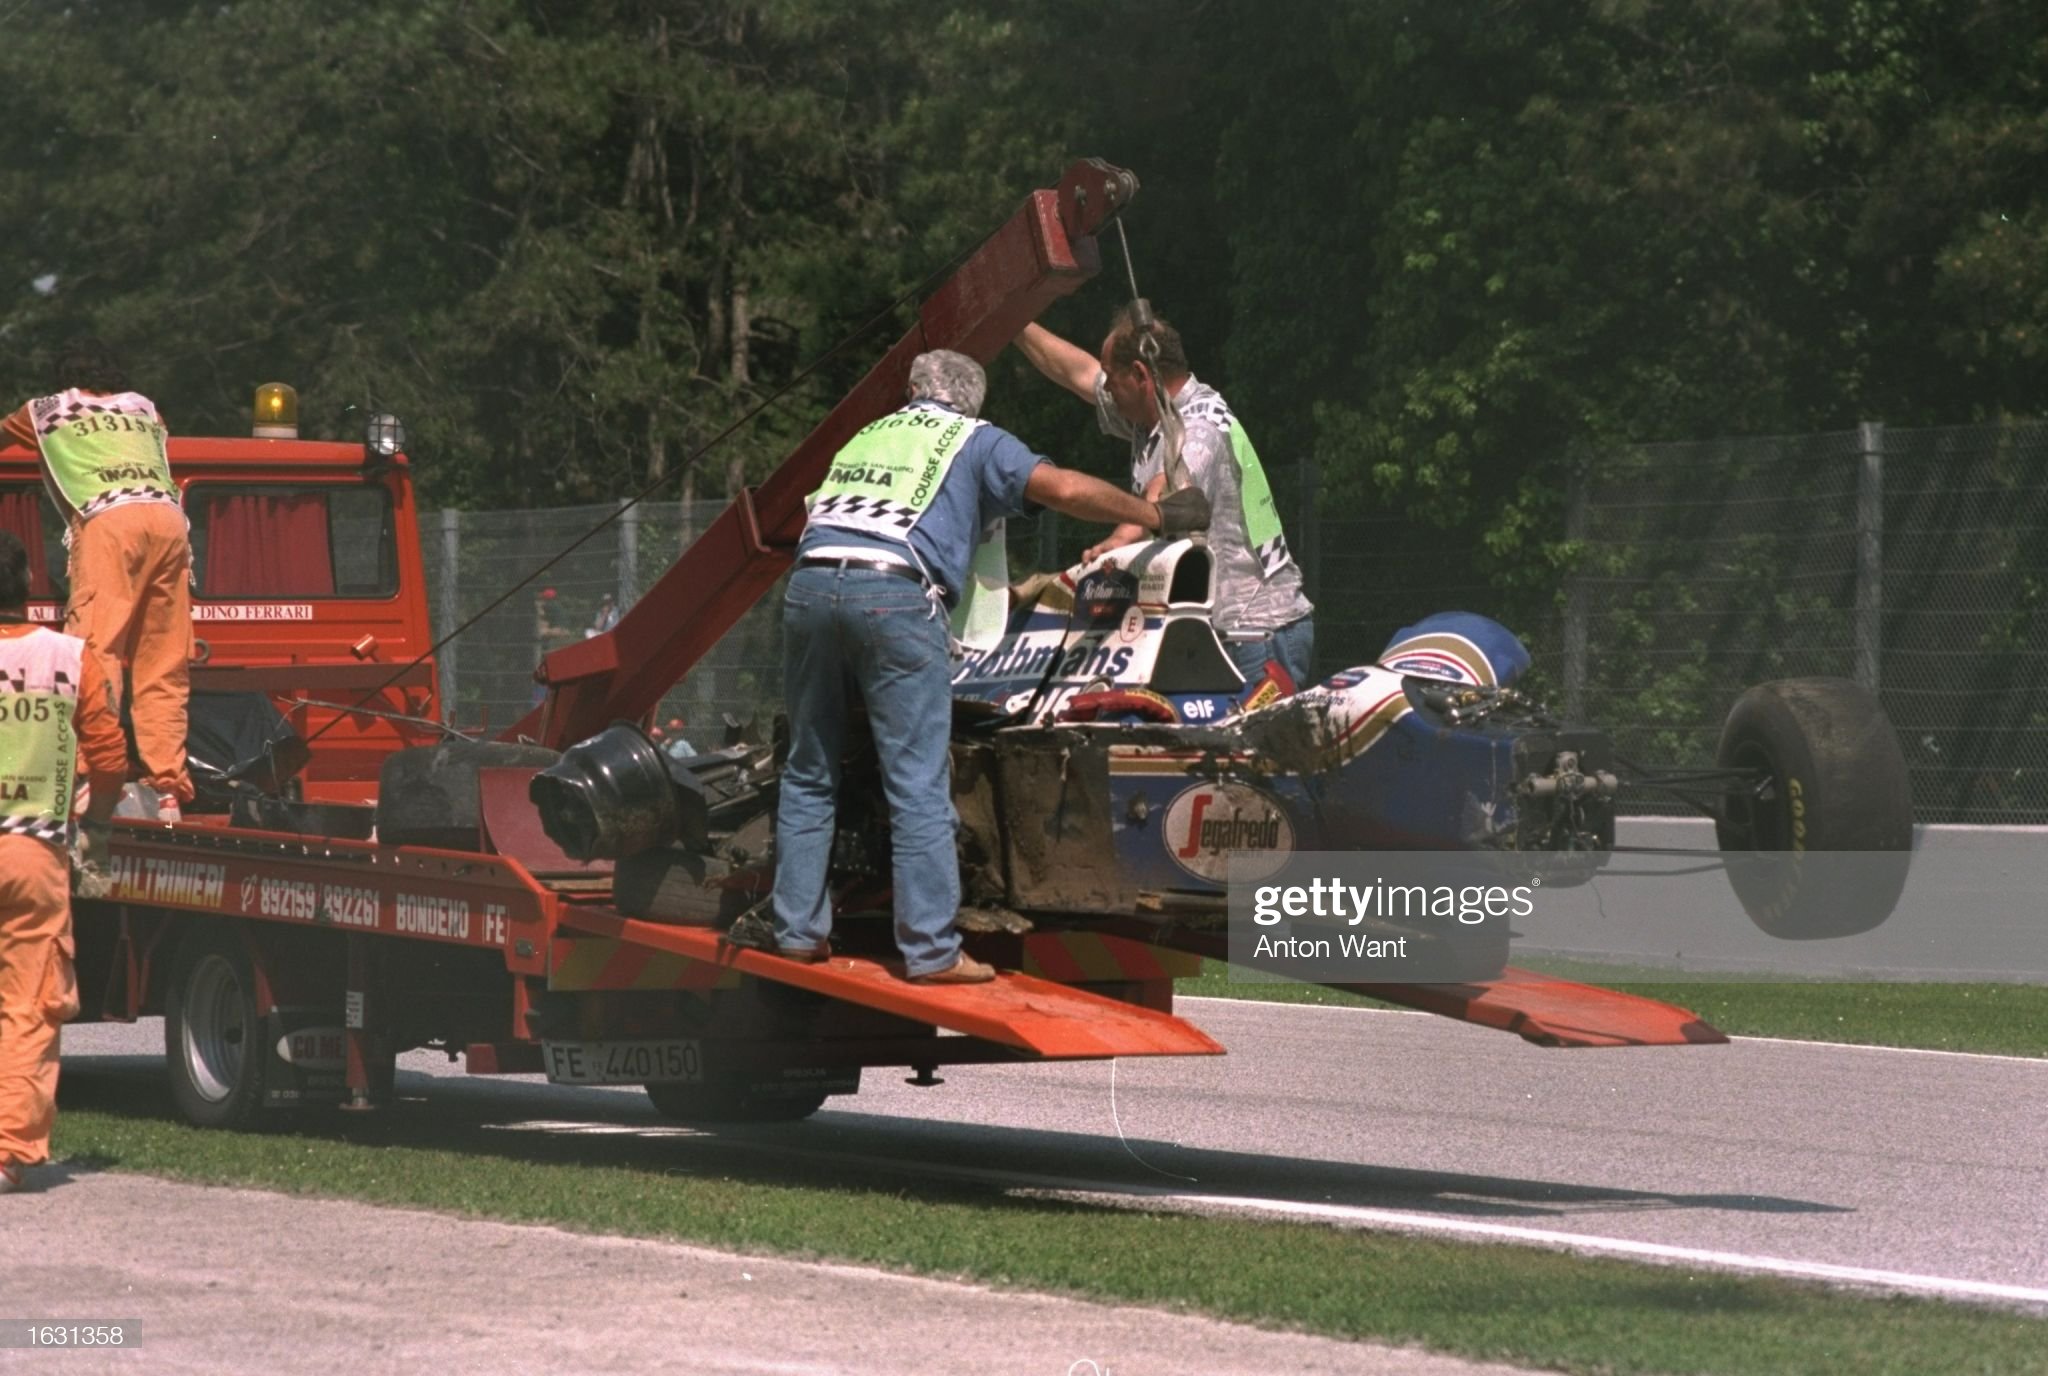 Ayrton Senna's Williams Renault is hauled off the circuit after Senna crashed during the San Marino Grand Prix at the Imola circuit on 01 May 1994.